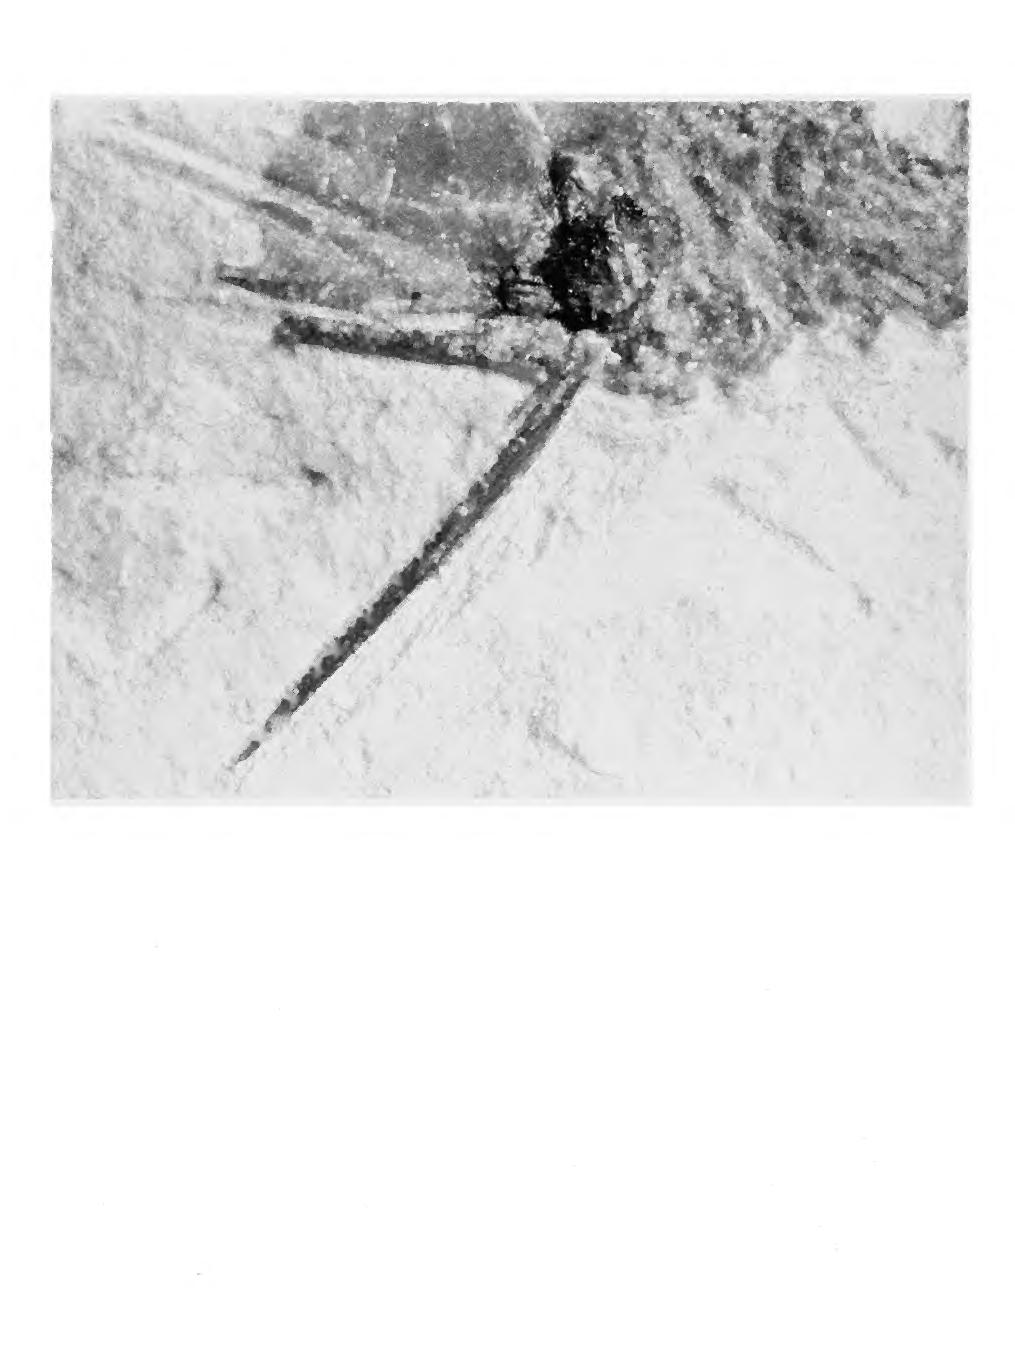 10 SMITHSONIAN CONTRIBUTIONS TO PALEOBIOLOGY FIGURE 6. Photograph of the pelvic region of the holotype of Cretatriacanthus guidottii, MCSNV 1377, 24.